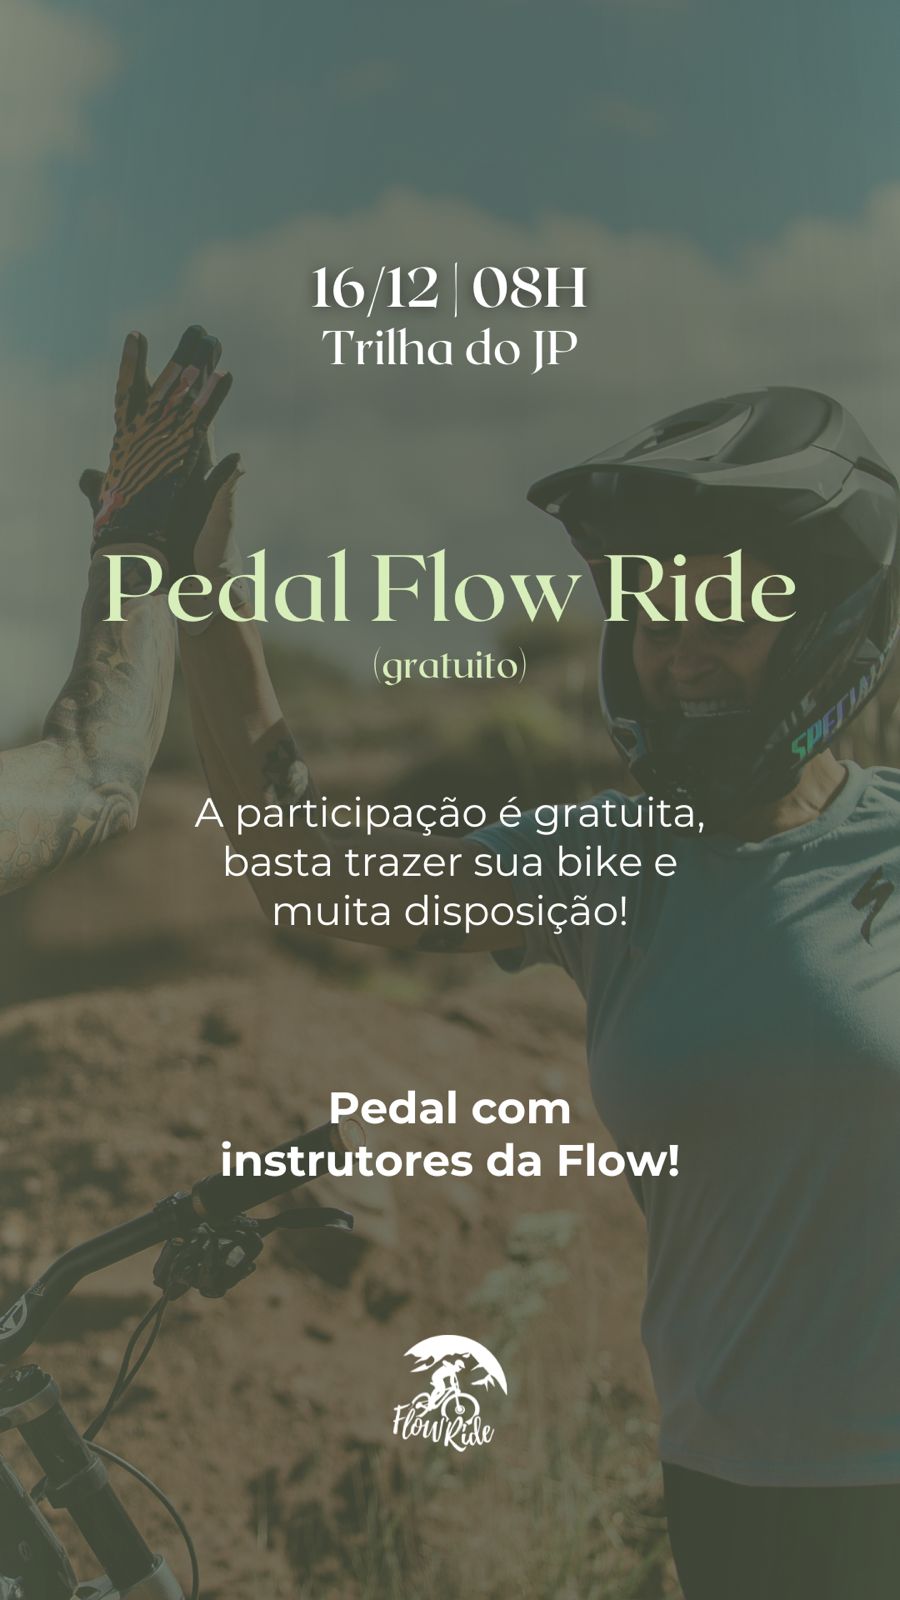 Flow Ride promove Pedal gratuito no dia 16 1